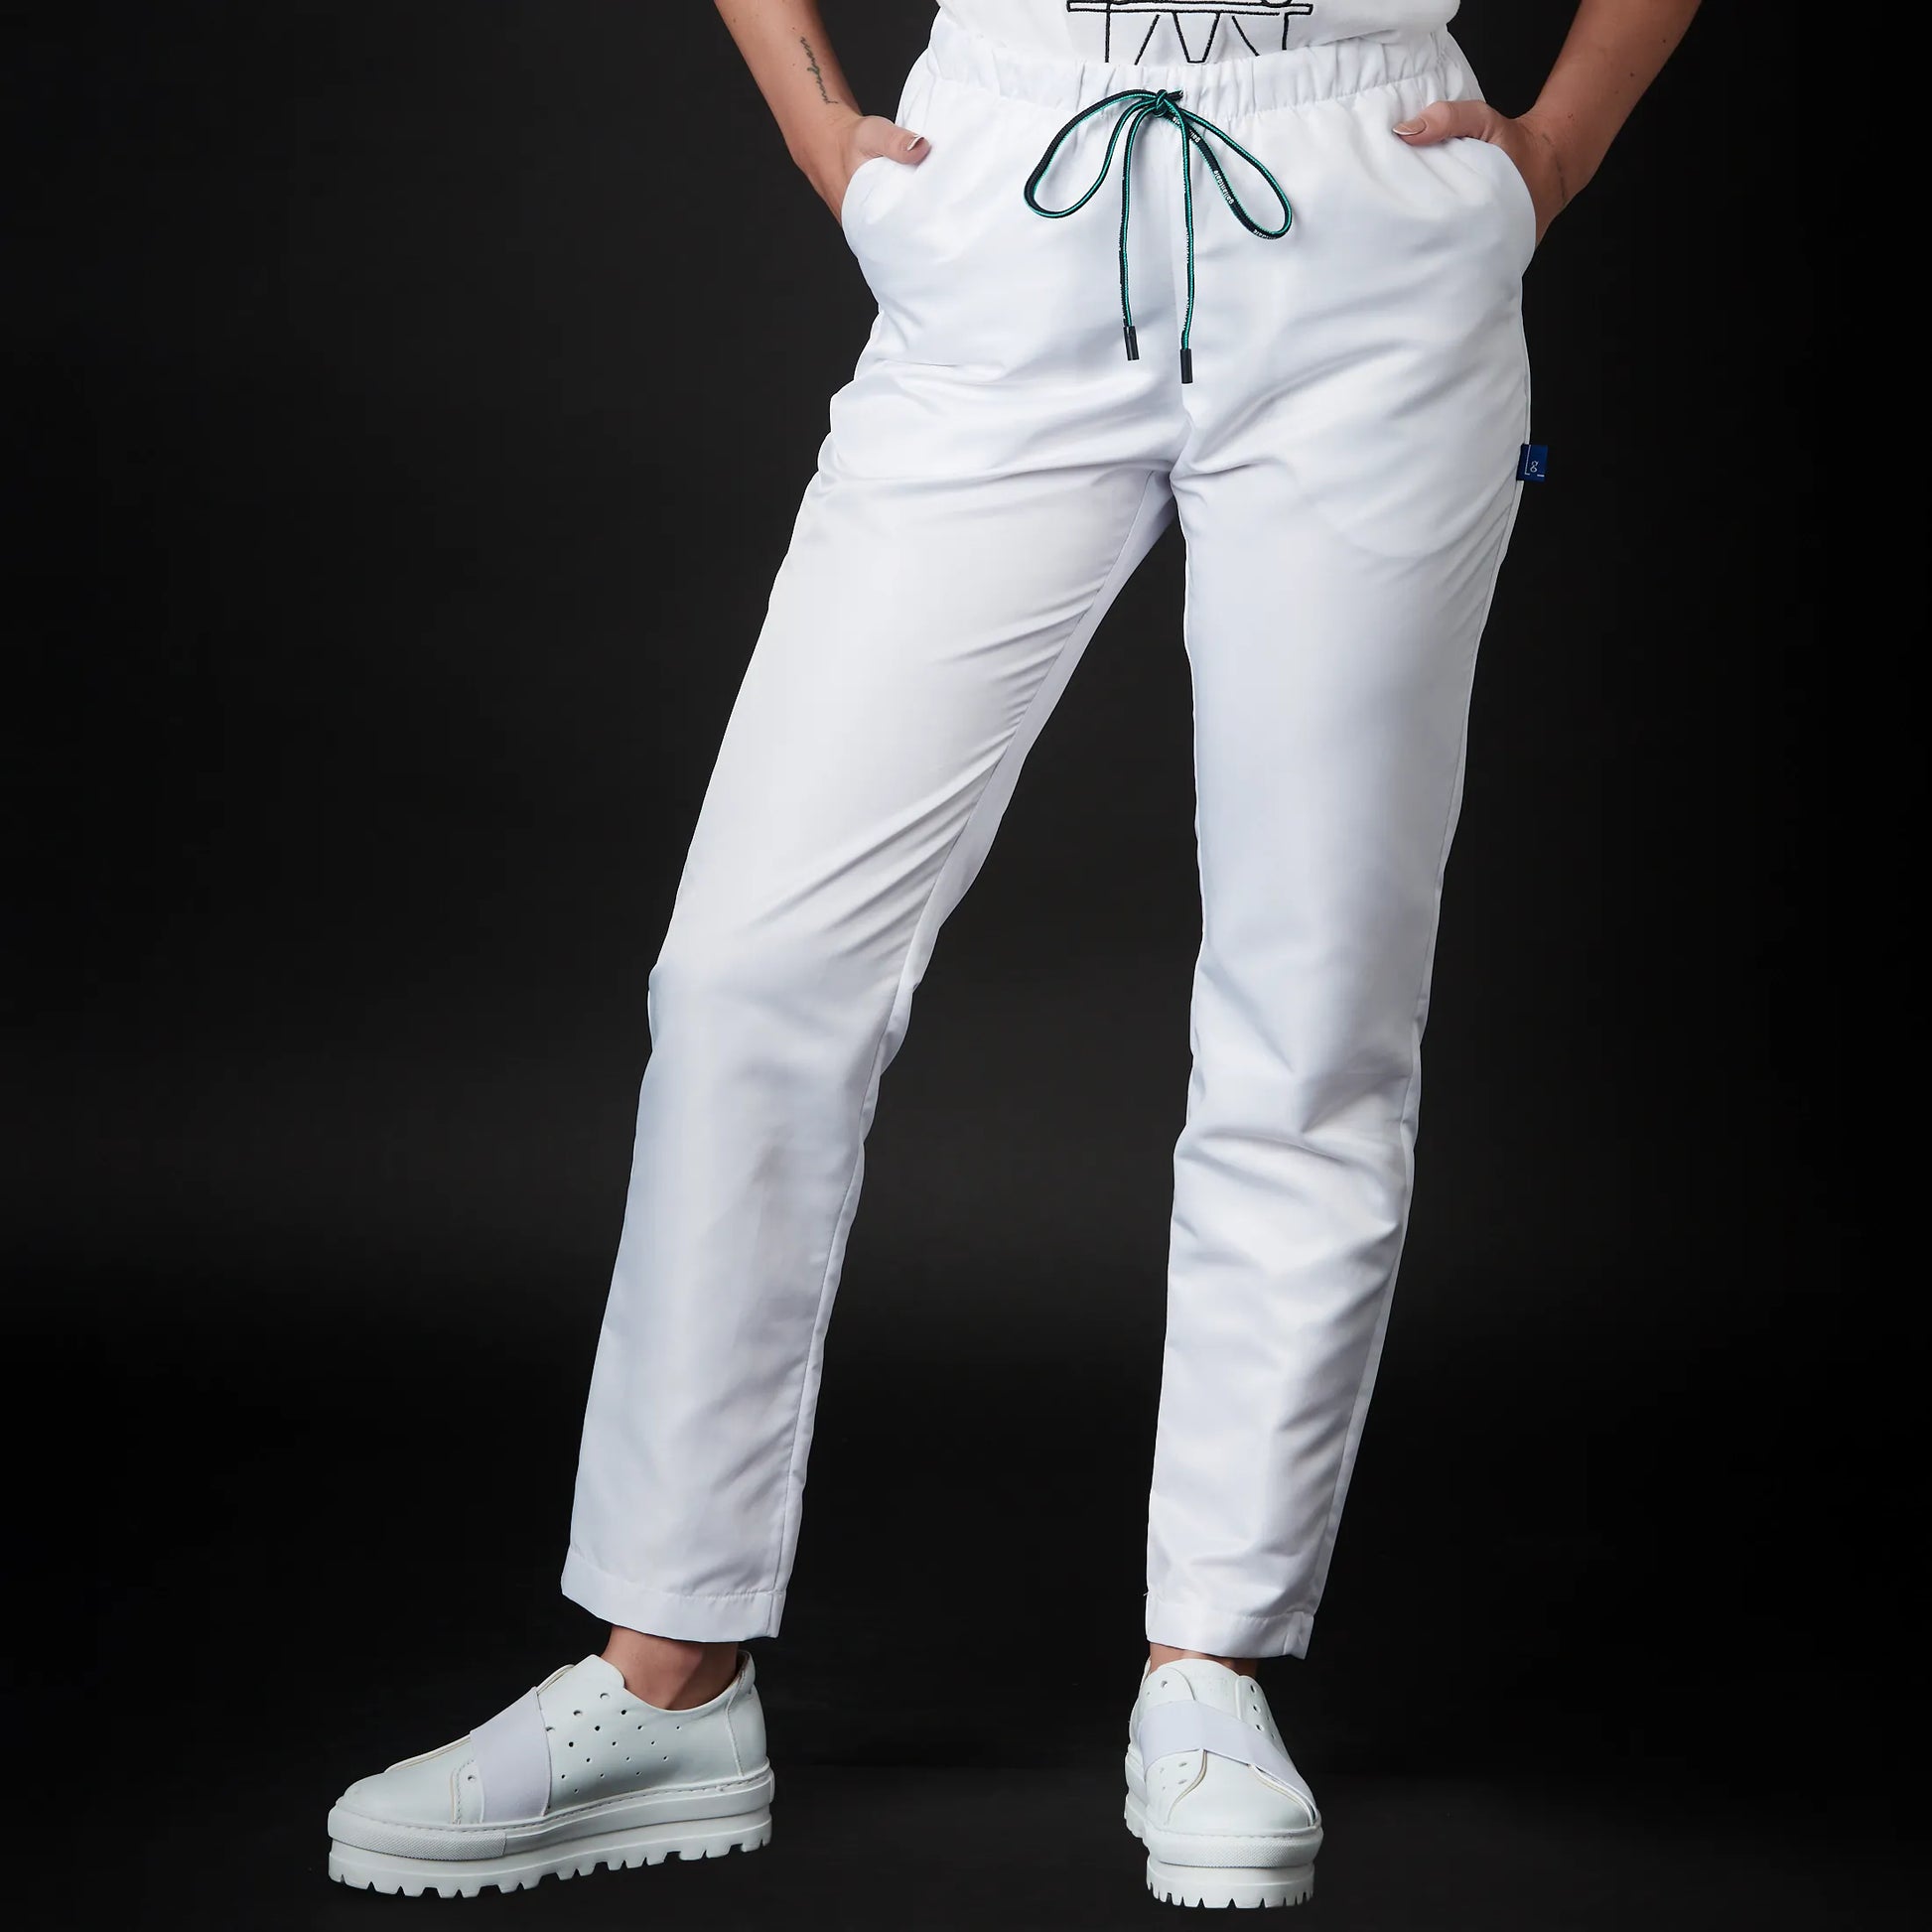 Pantalón Mujer Blanco, Uniformes Clínicos